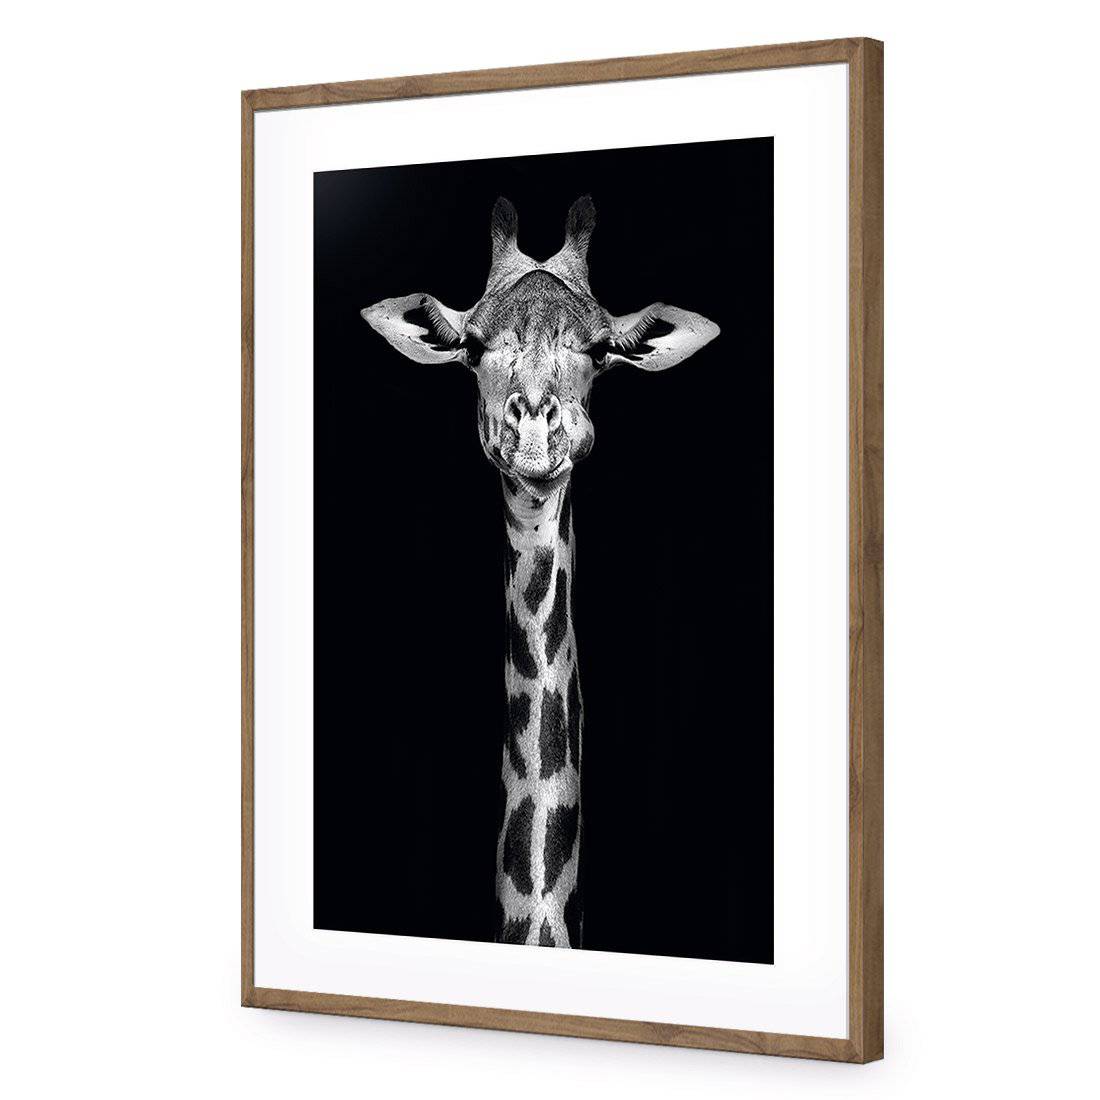 Thornycroft Giraffe-Acrylic-Wall Art Design-With Border-Acrylic - Natural Frame-45x30cm-Wall Art Designs